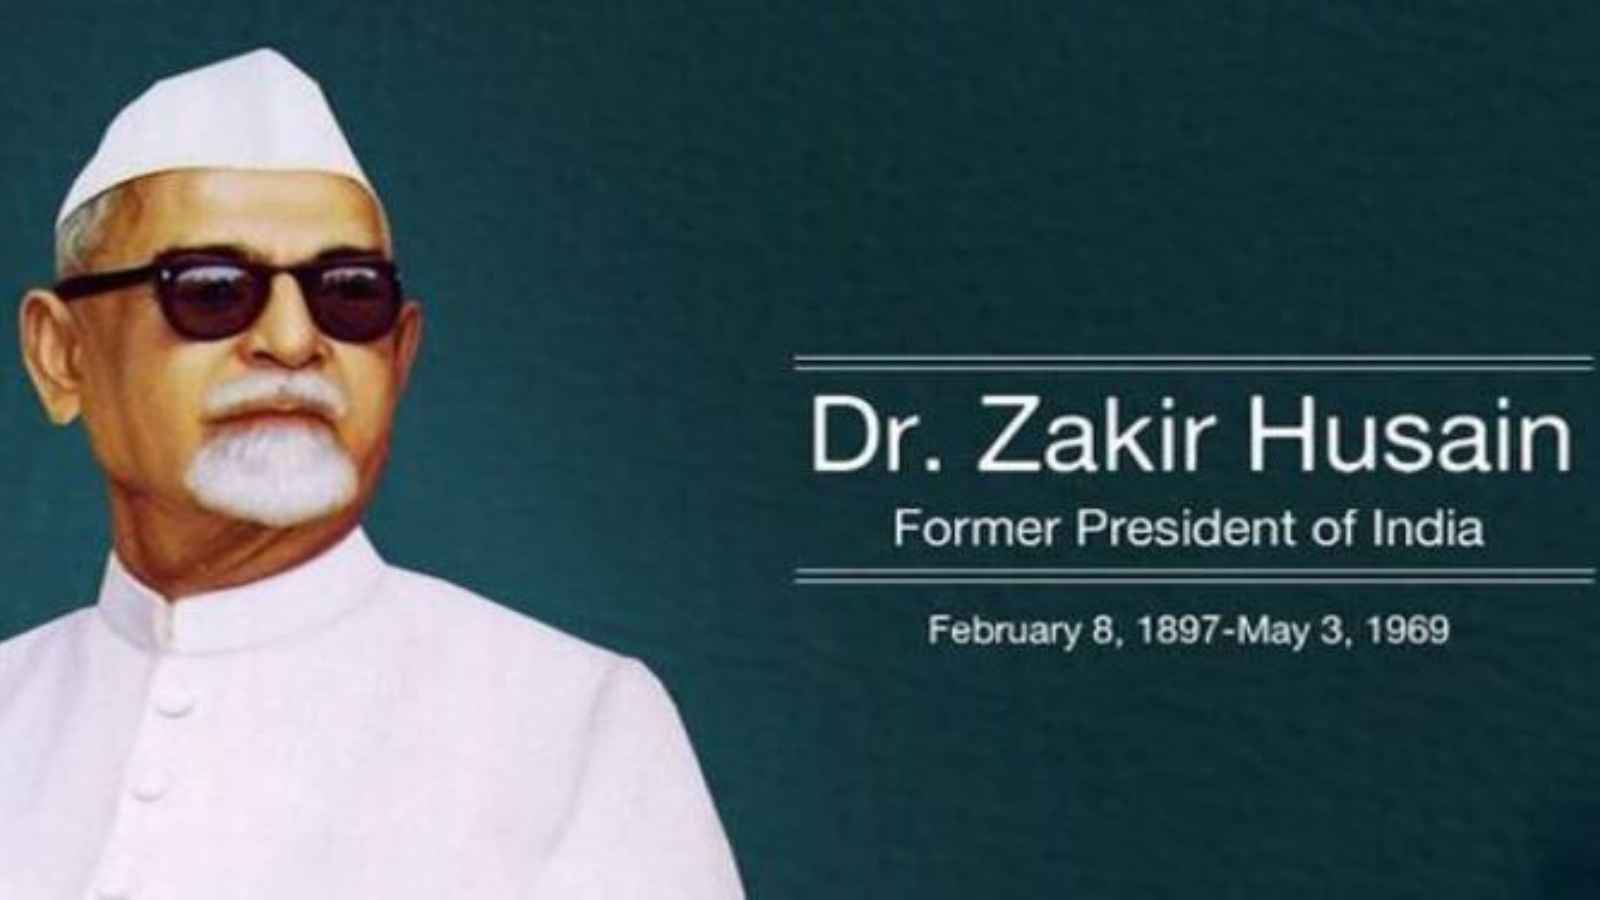 Dr Zakir Husain Biography: Age, Birthday, Early life, Education, Career, Awards, Personal Life